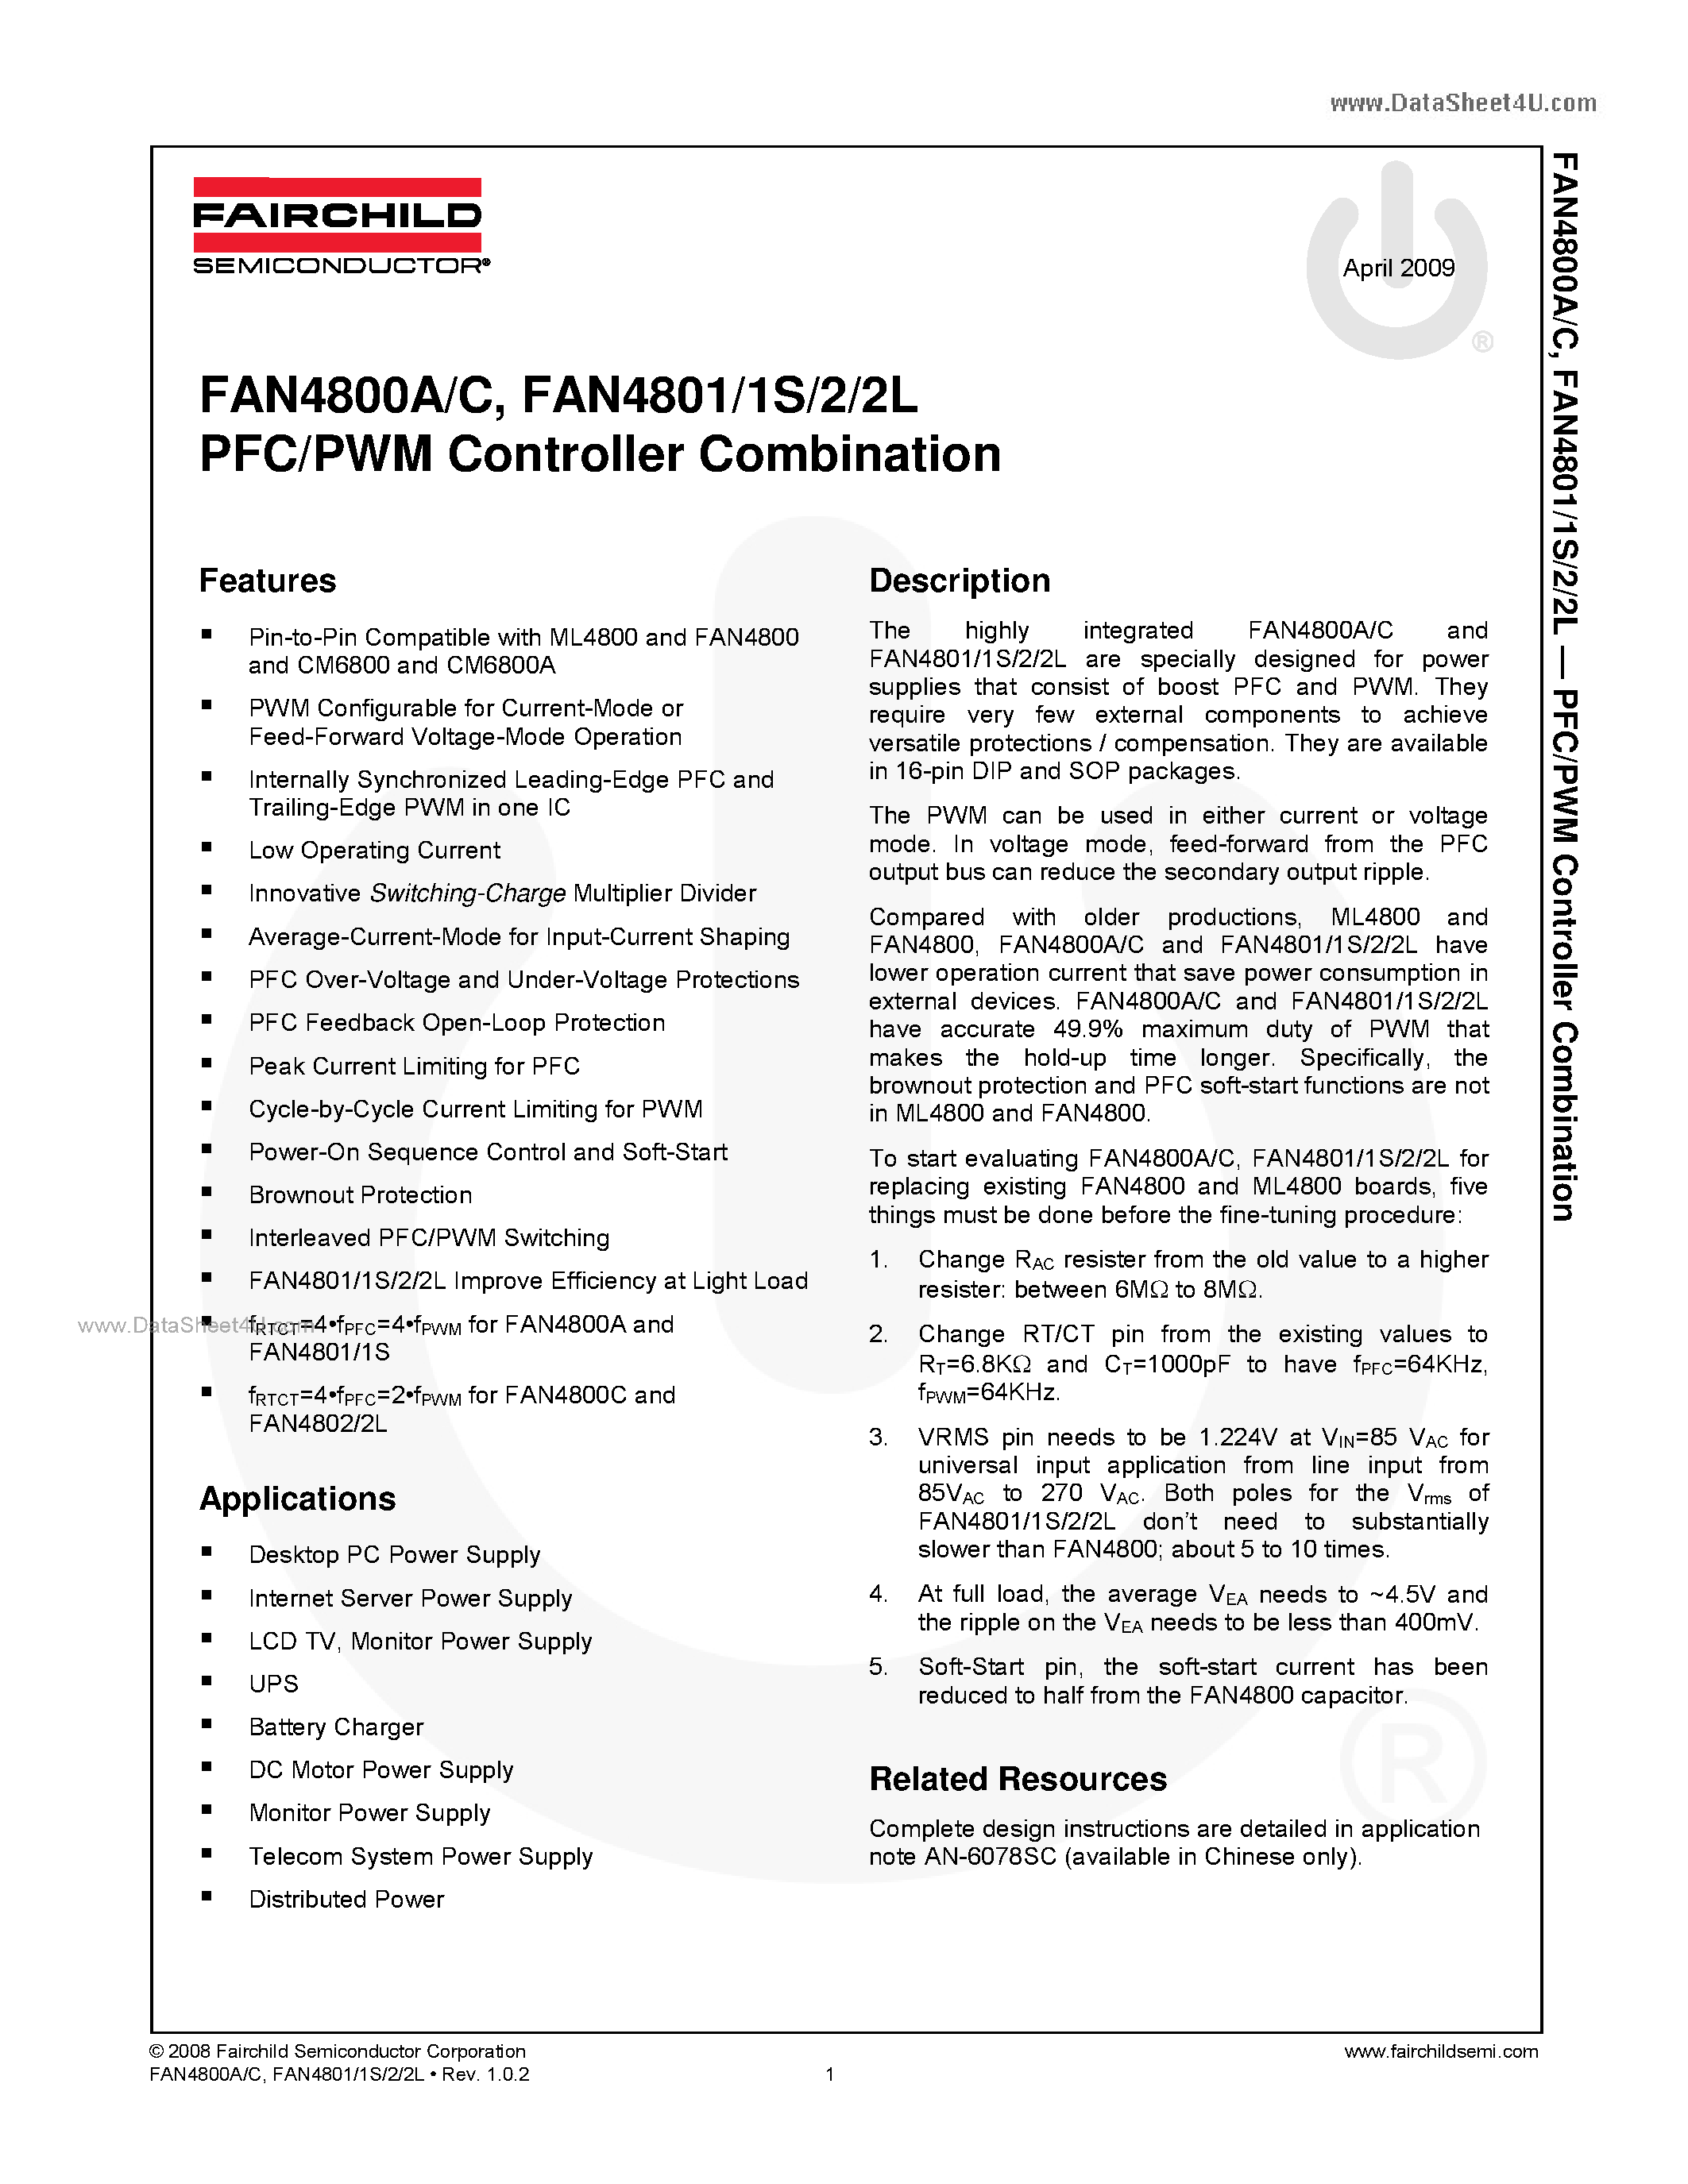 Datasheet FAN4800A - (FAN4800x / FAN480xx) PFC/PWM Controller Combination page 1